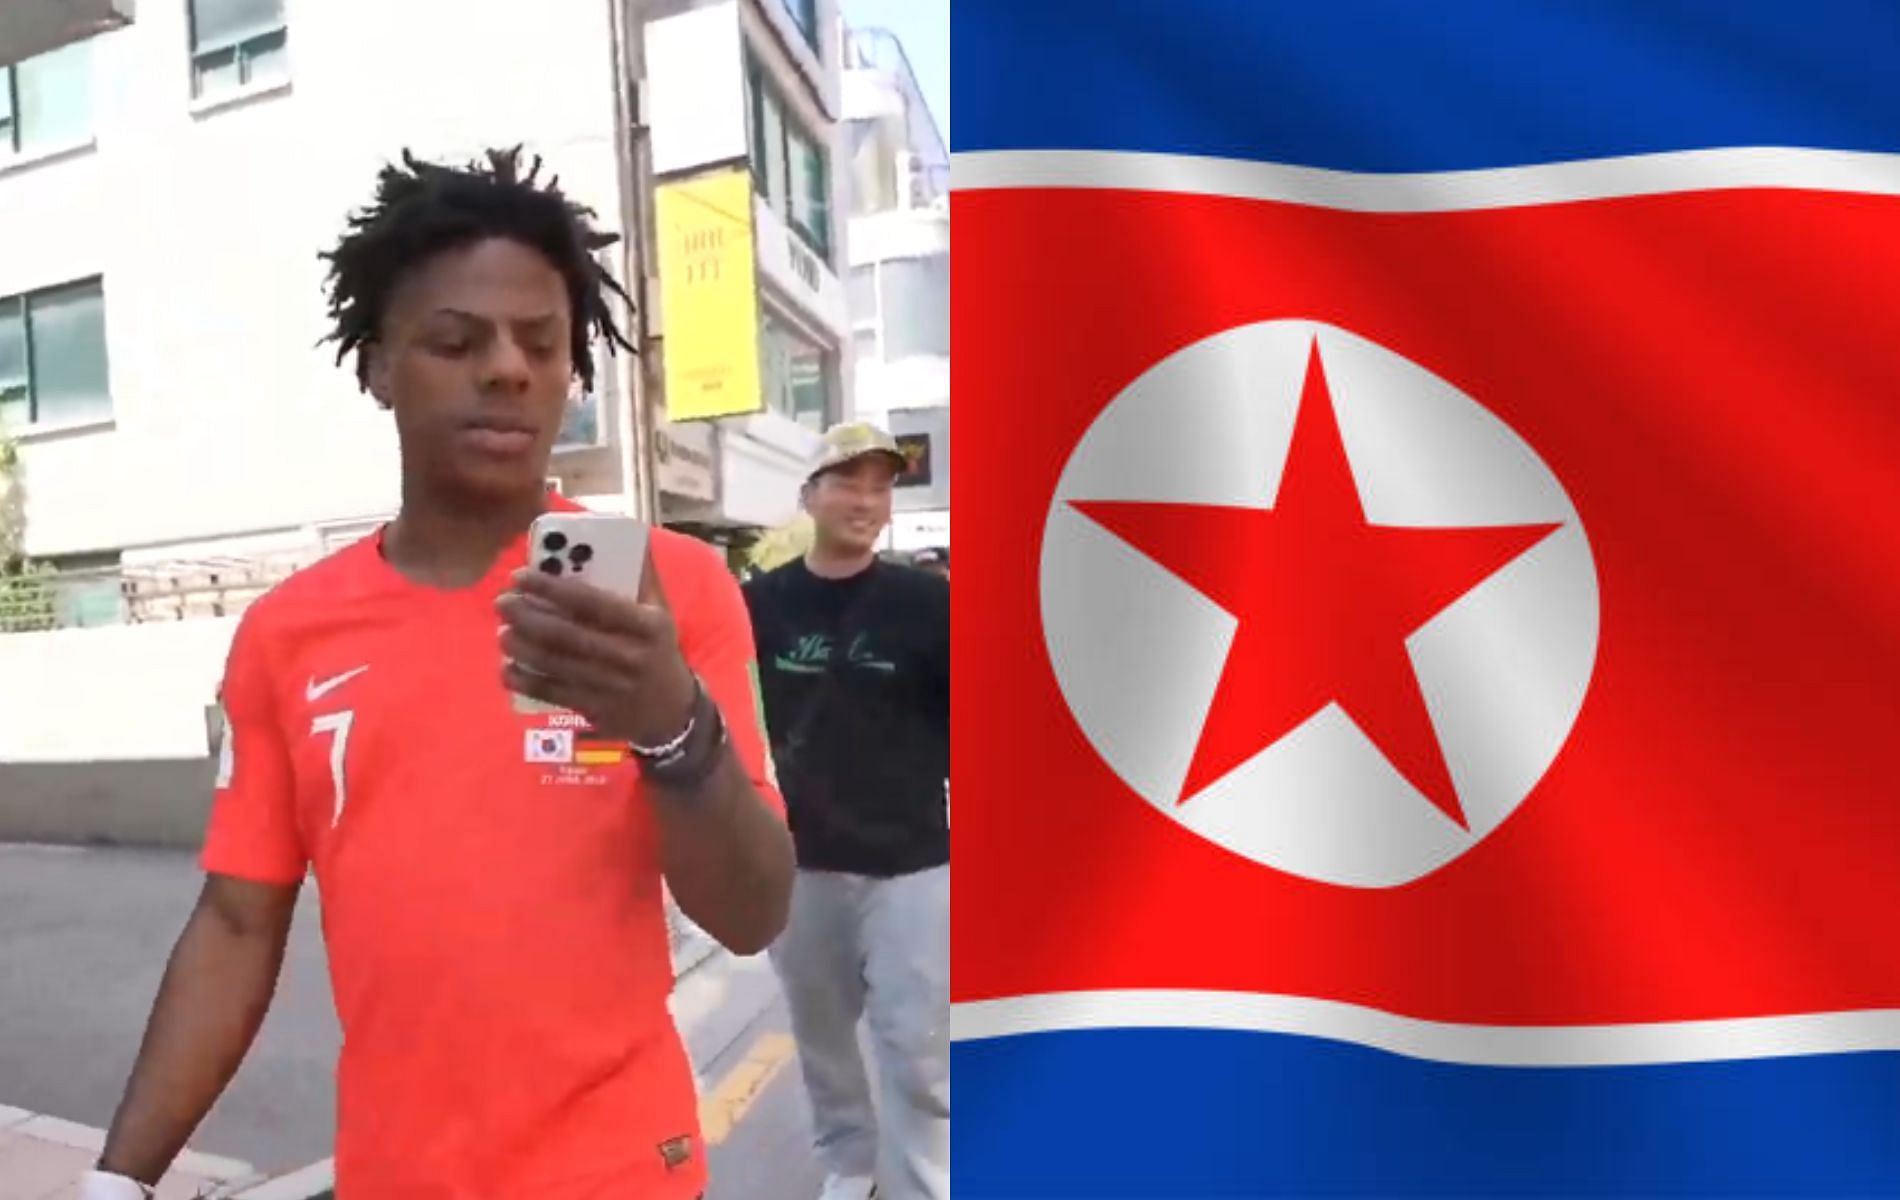 IShowSpeed claims he will travel to North Korea tomorrow (Image via YouTube/IShowSpeed and iStockphoto.com)